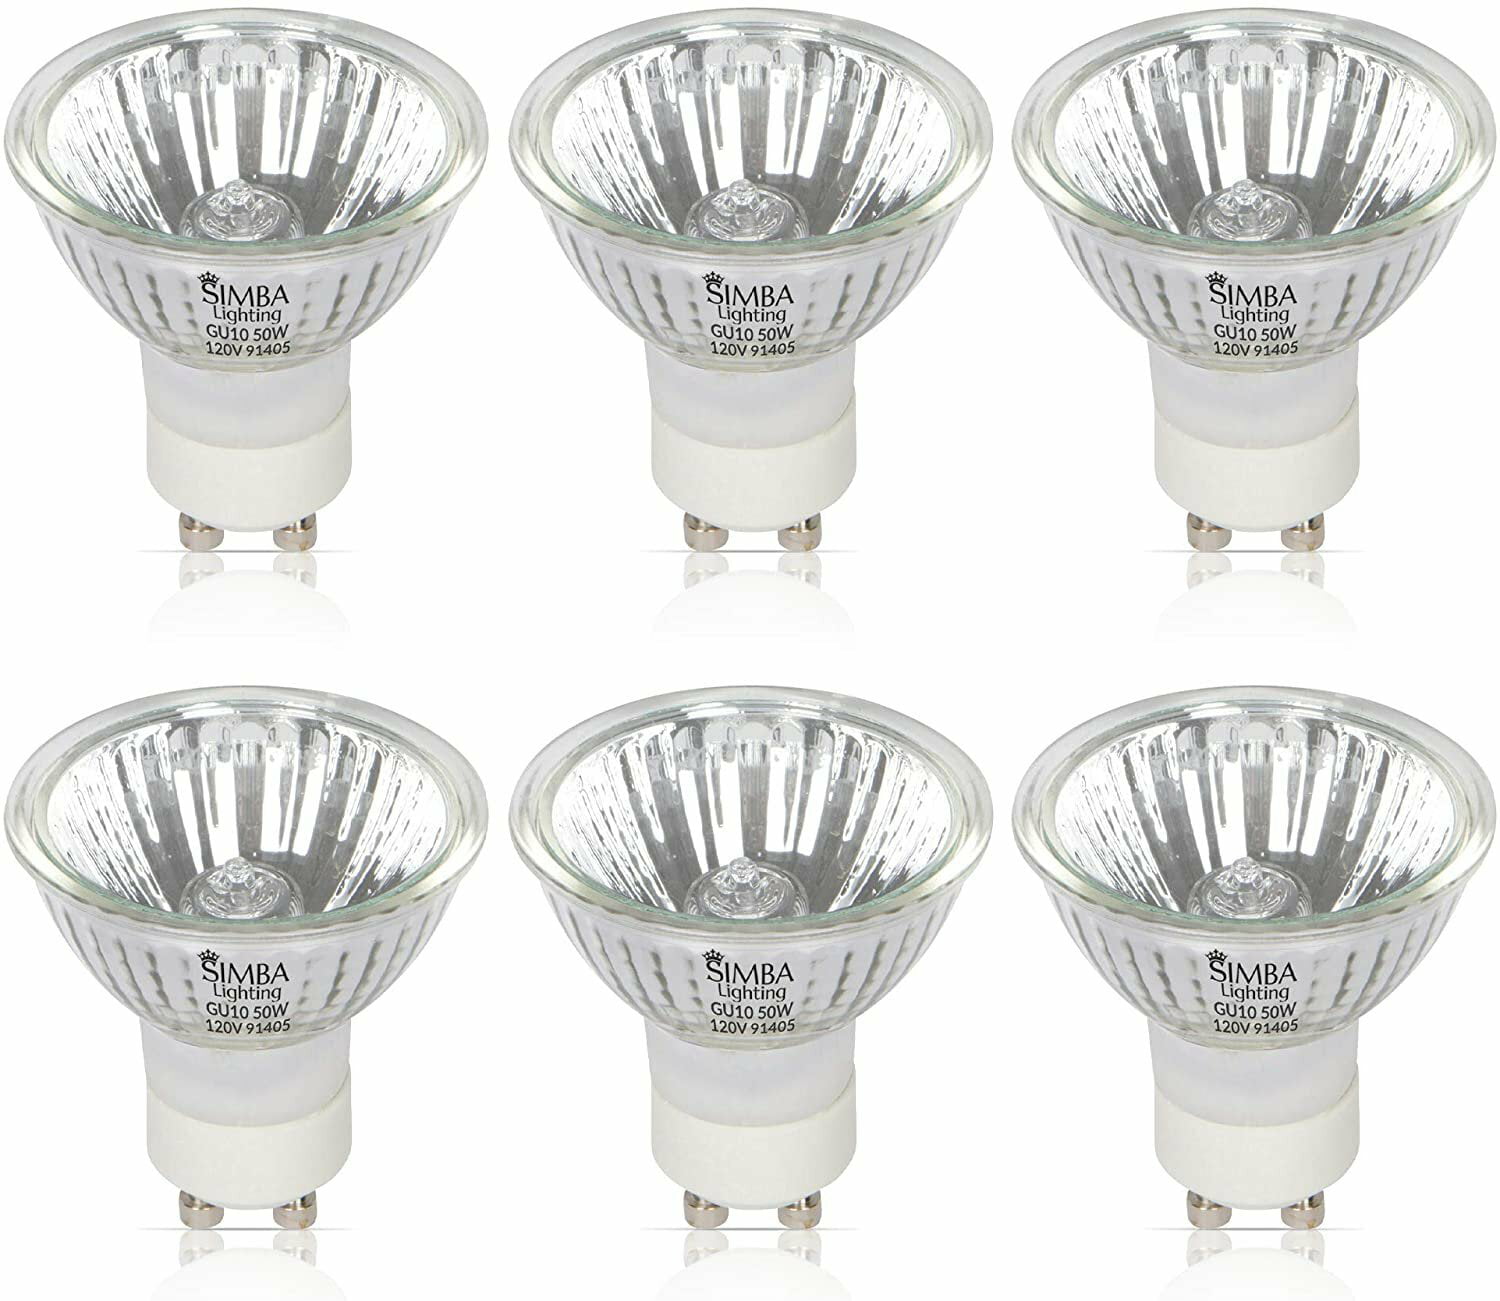 Candle Warmer Light Bulbs 25 Watt Replacement Bulb 4 Packs Gu10+c 120 V 25 W 